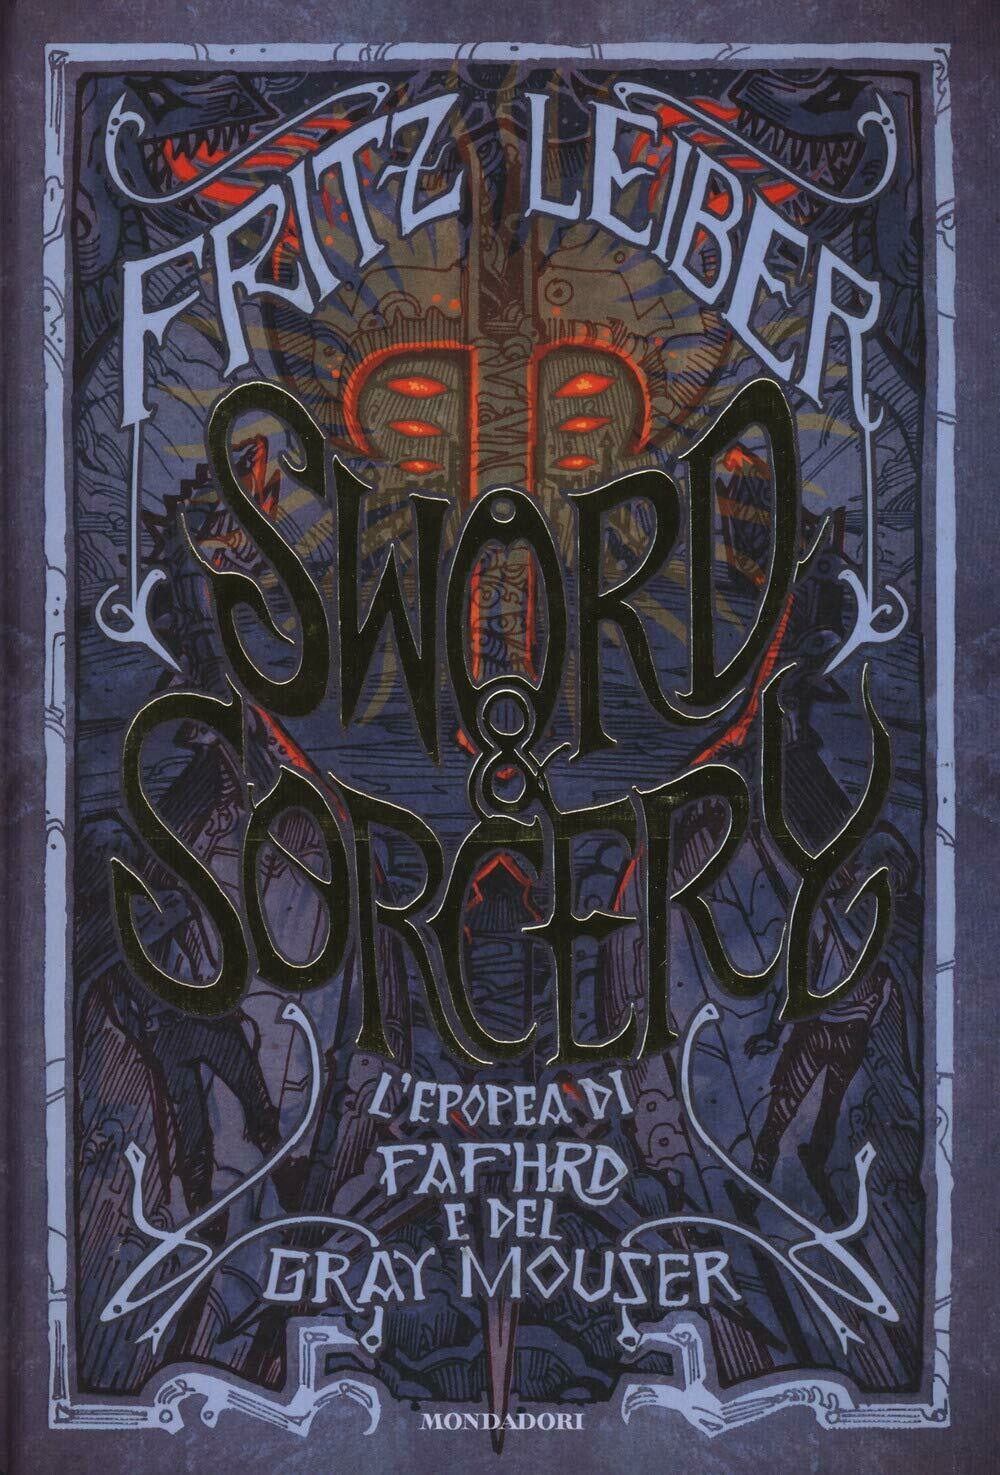 Sword & Sorcery